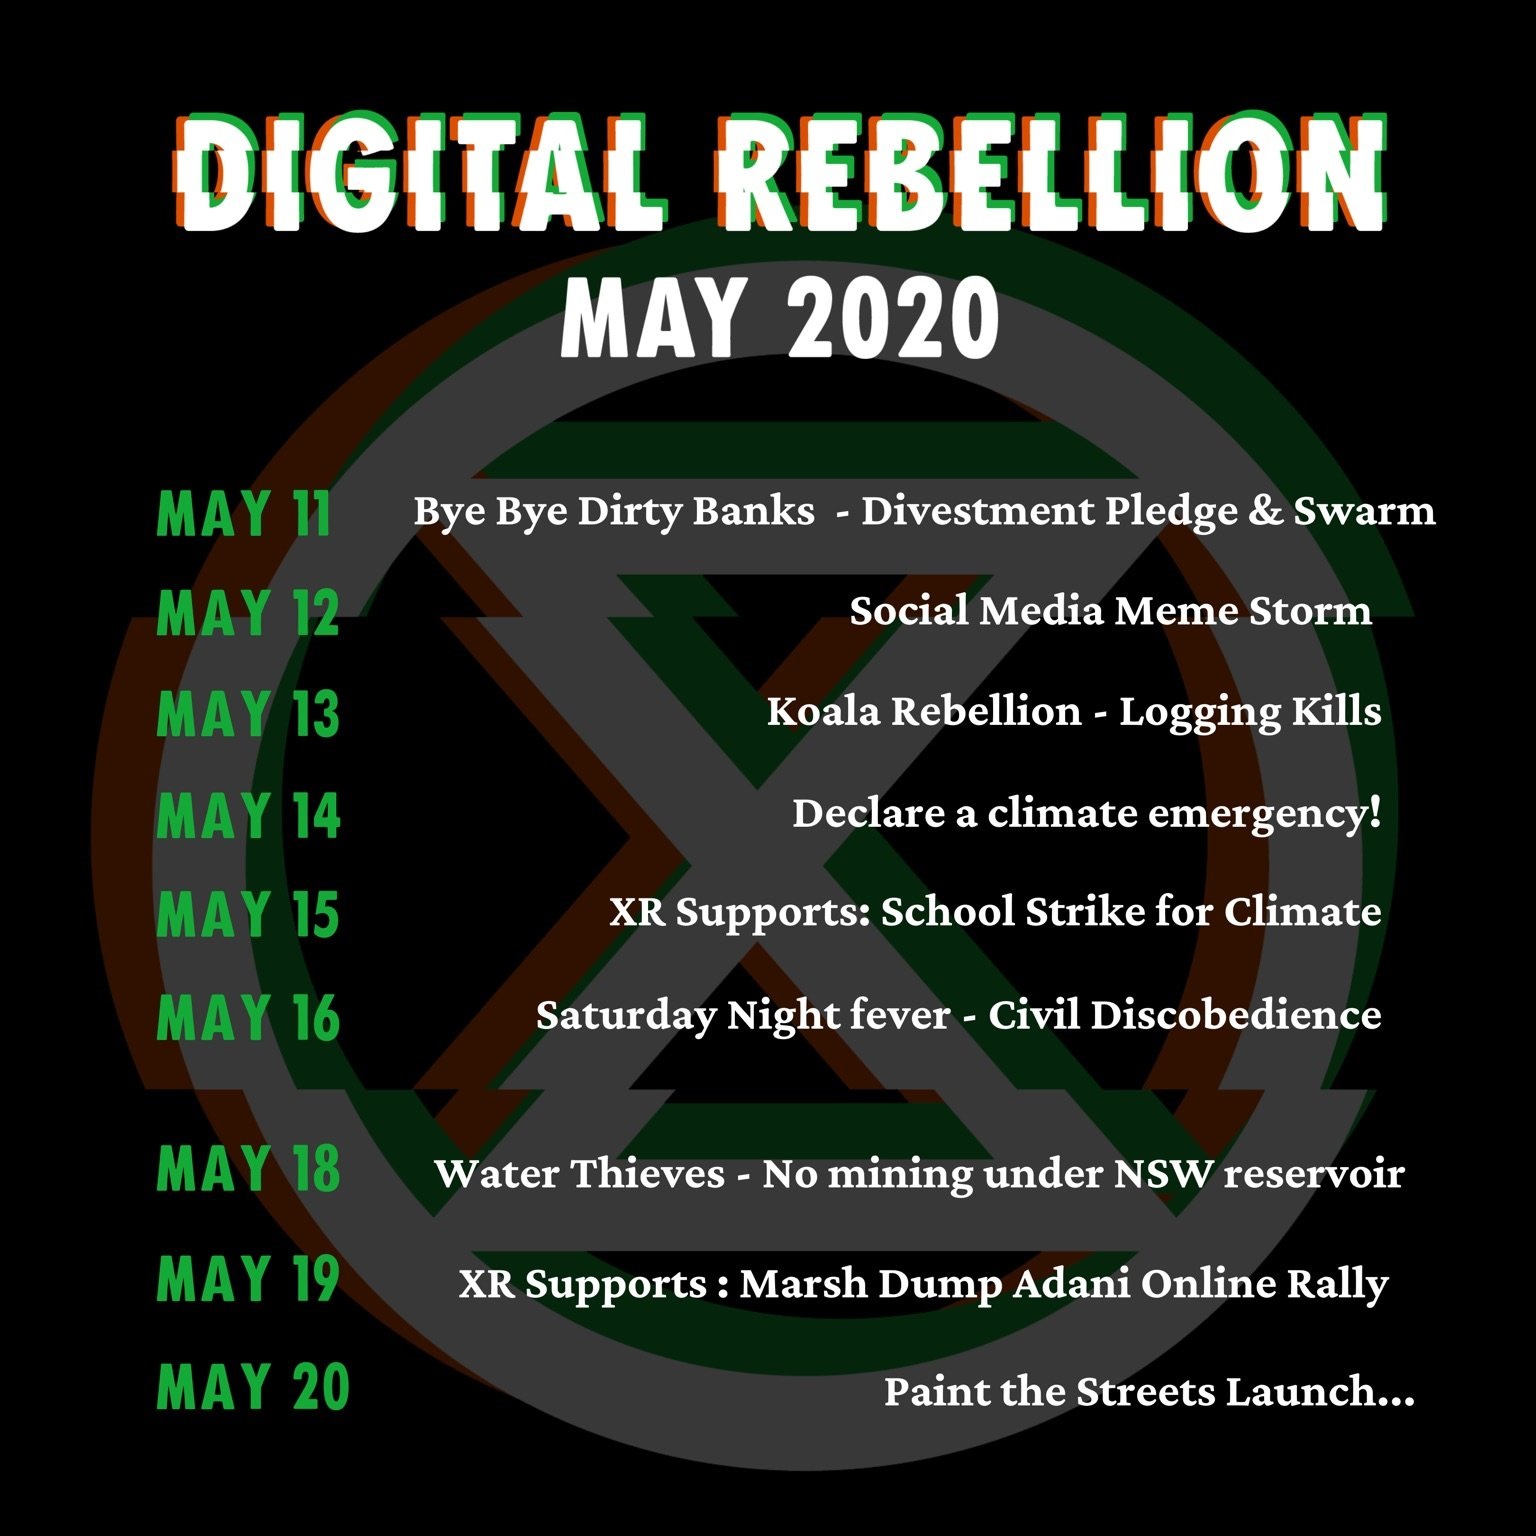 Digital rebellion list